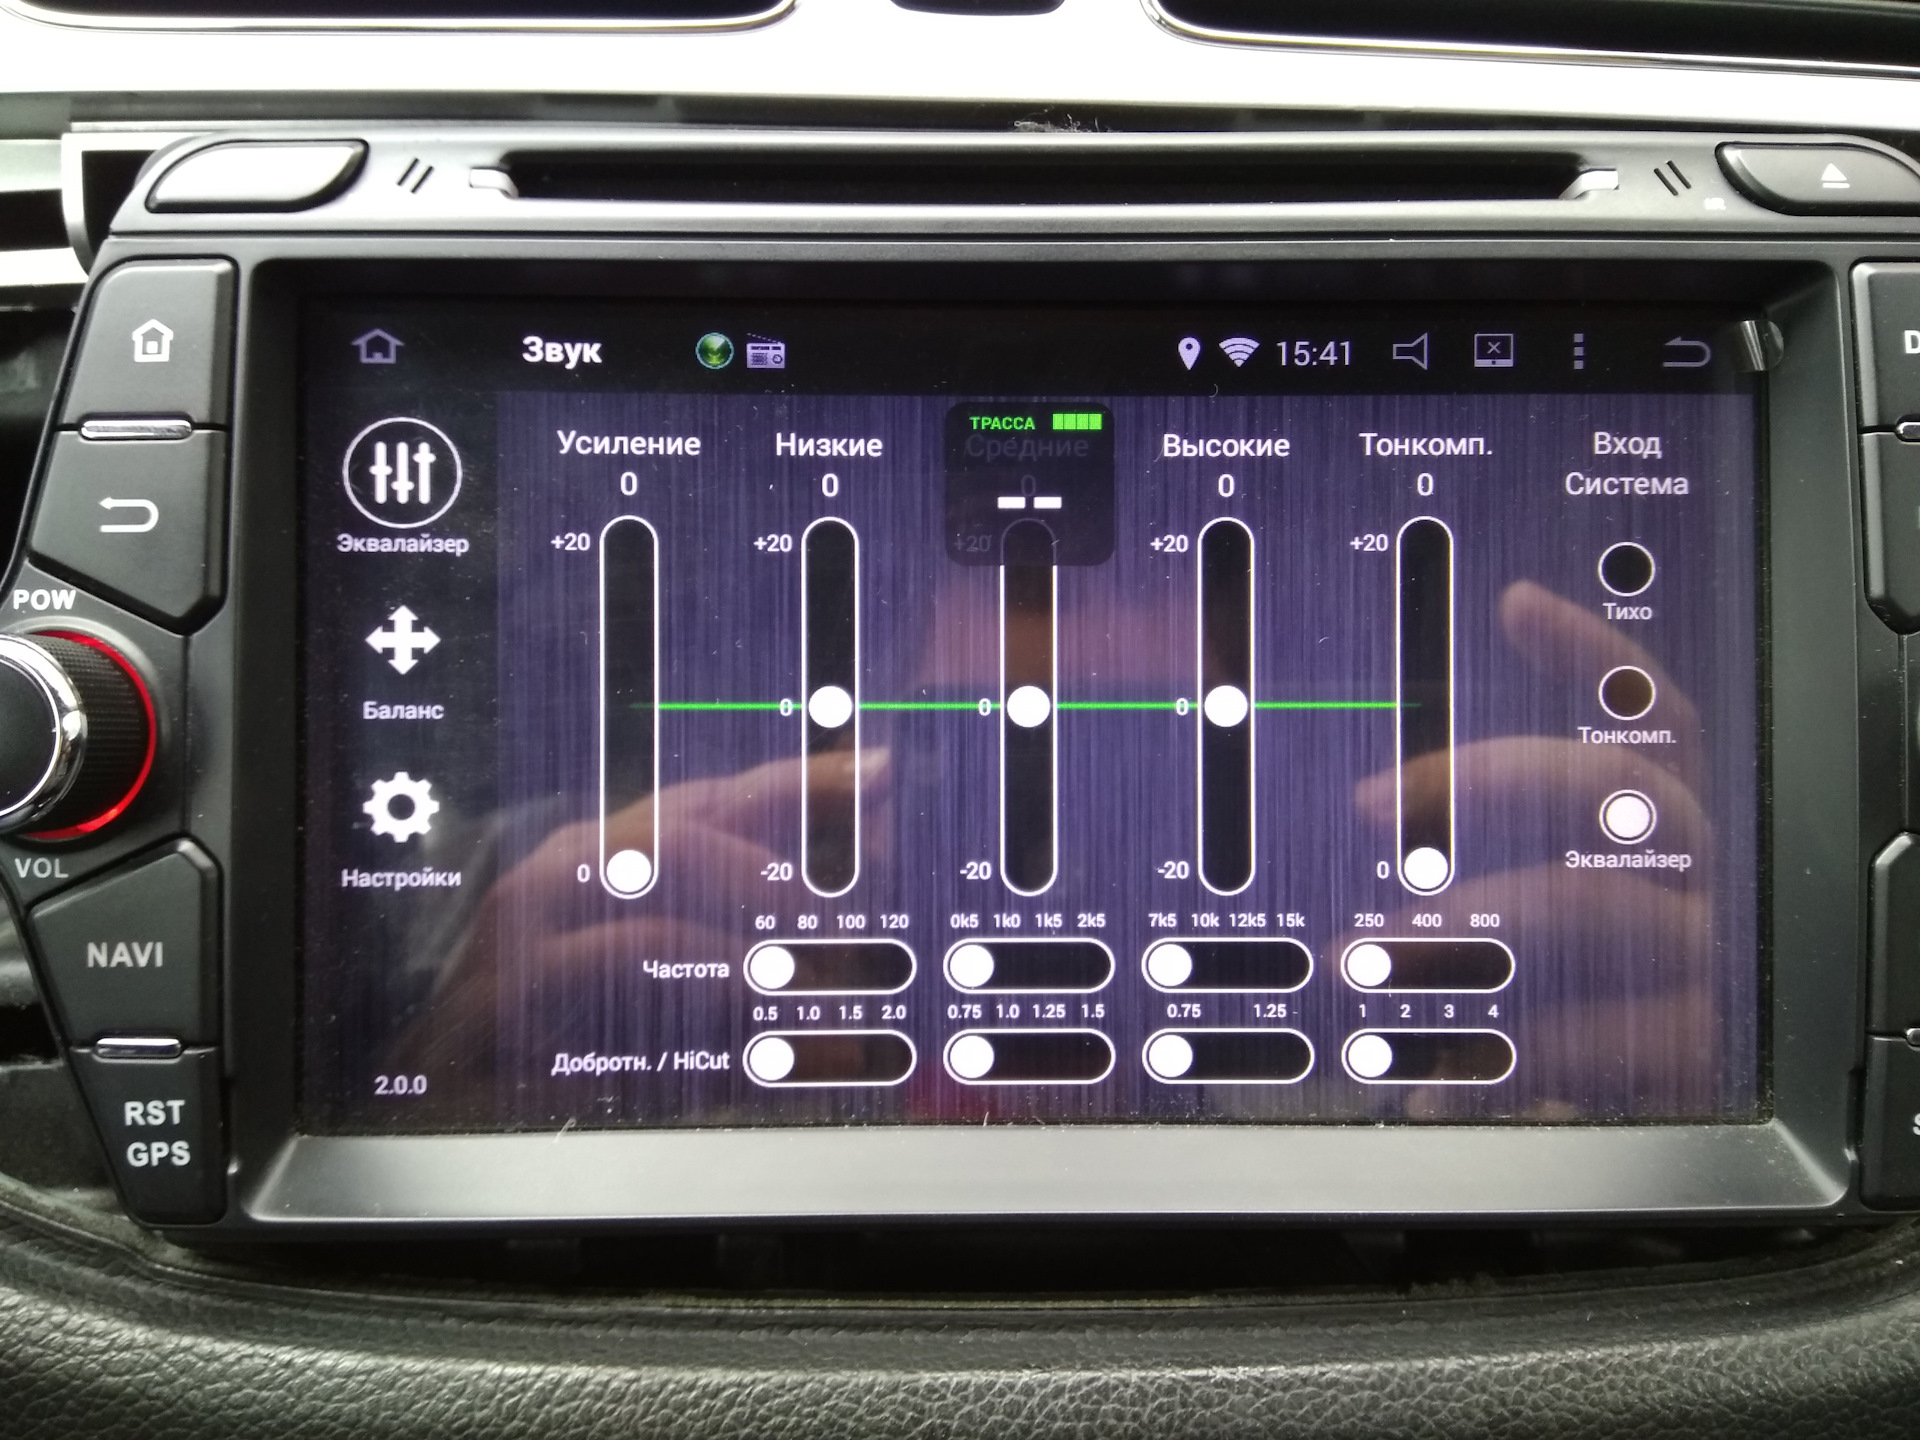 Автомагнитола качество звука. Эквалайзер магнитолы Hyundai 2013. Эквалайзер Киа СИД. Эквалайзер Киа к5. Эквалайзер для андроид магнитолы китайской.